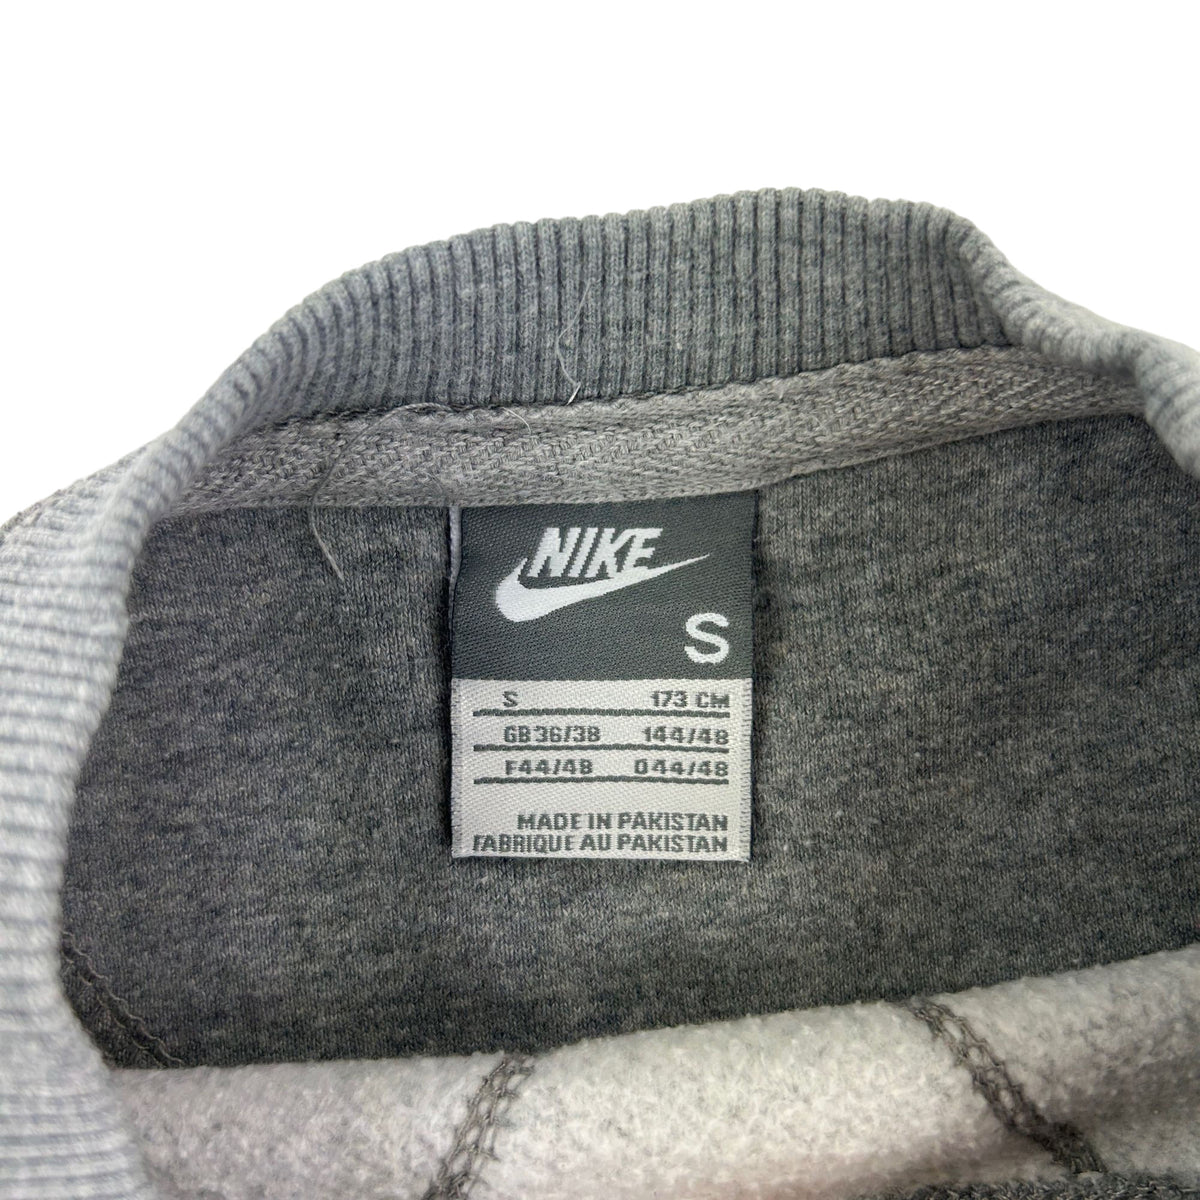 Vintage Nike Sweatshirt Size S